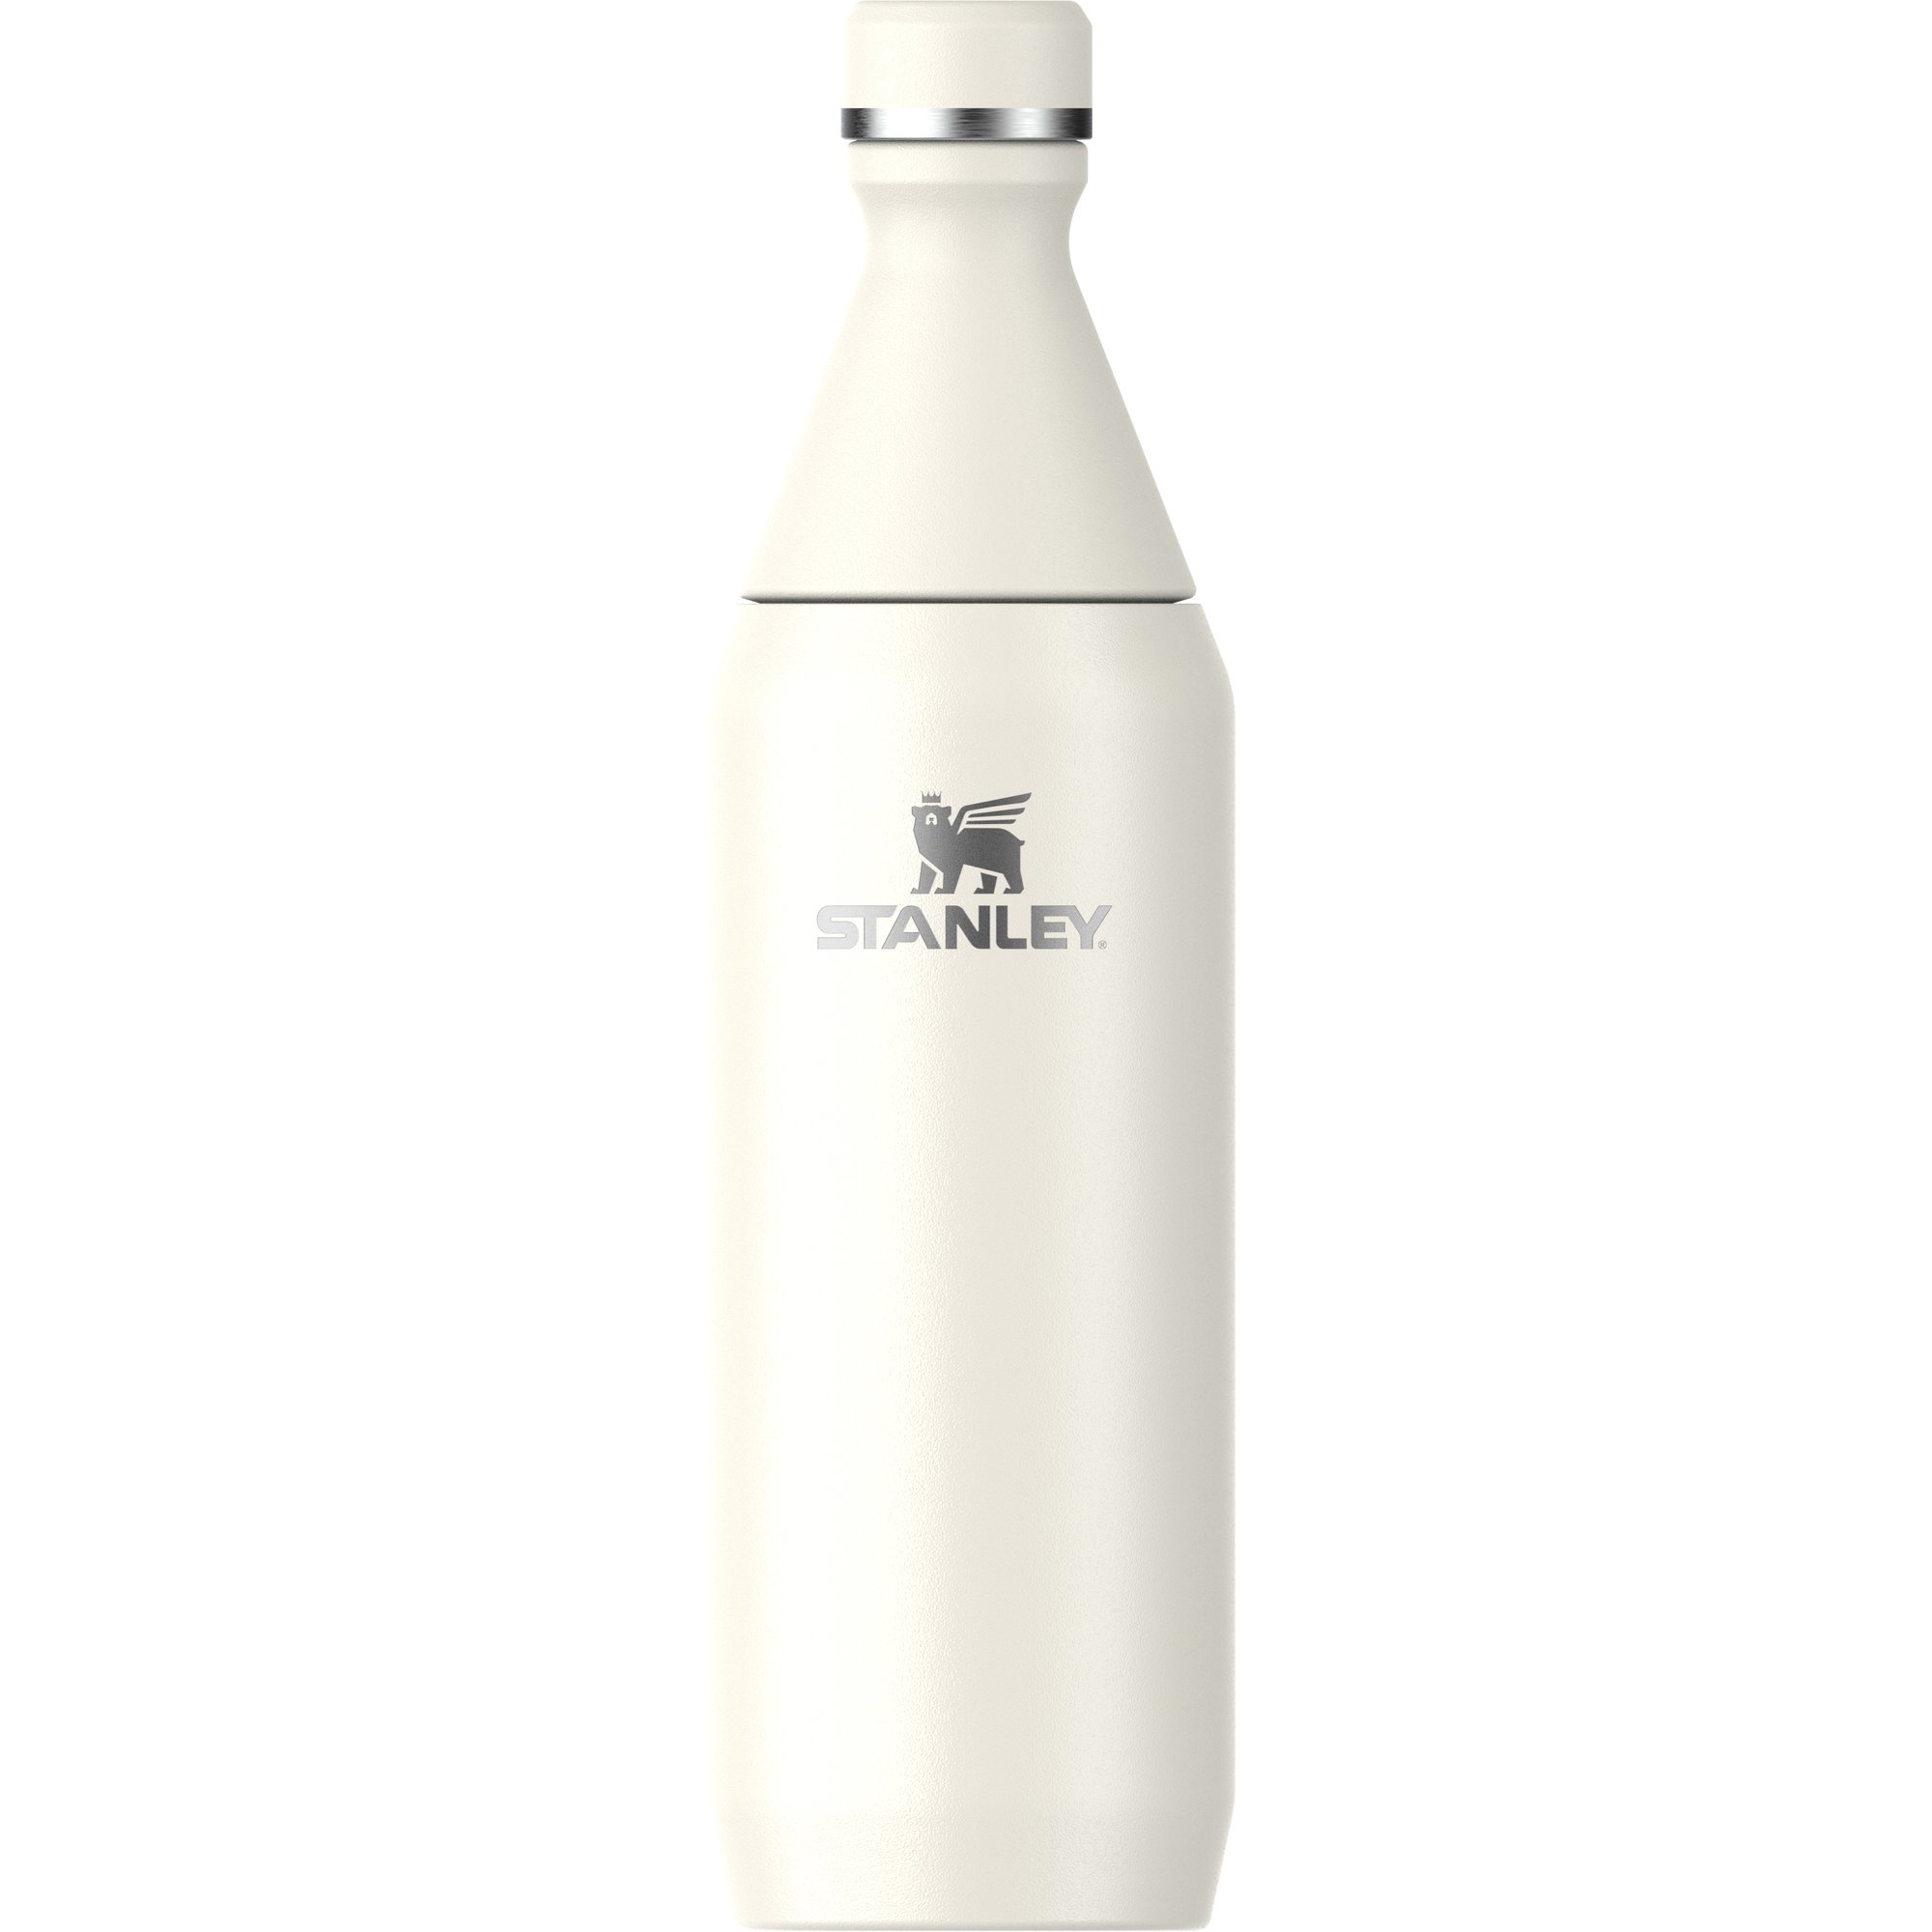 All Day Slim Bottle termoflaske 0.6 liter cream